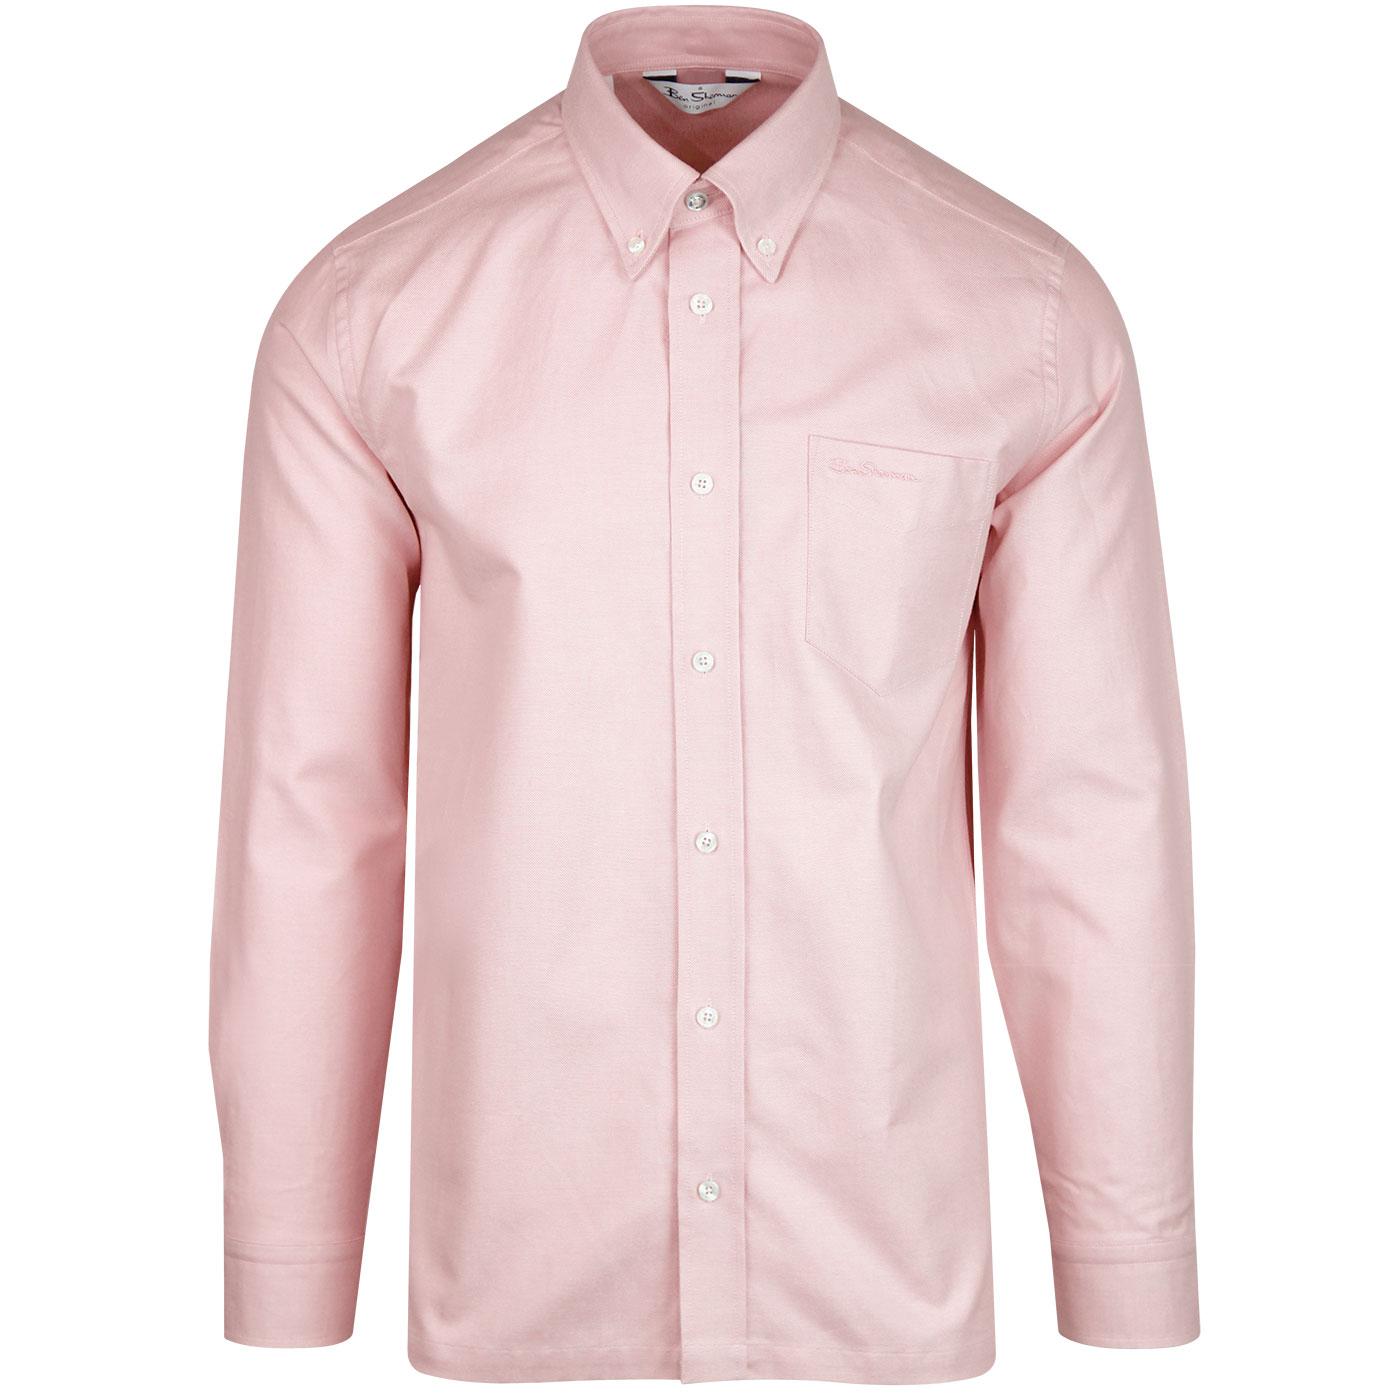 BEN SHERMAN Archive Benny Mod Oxford Shirt in Light Pink